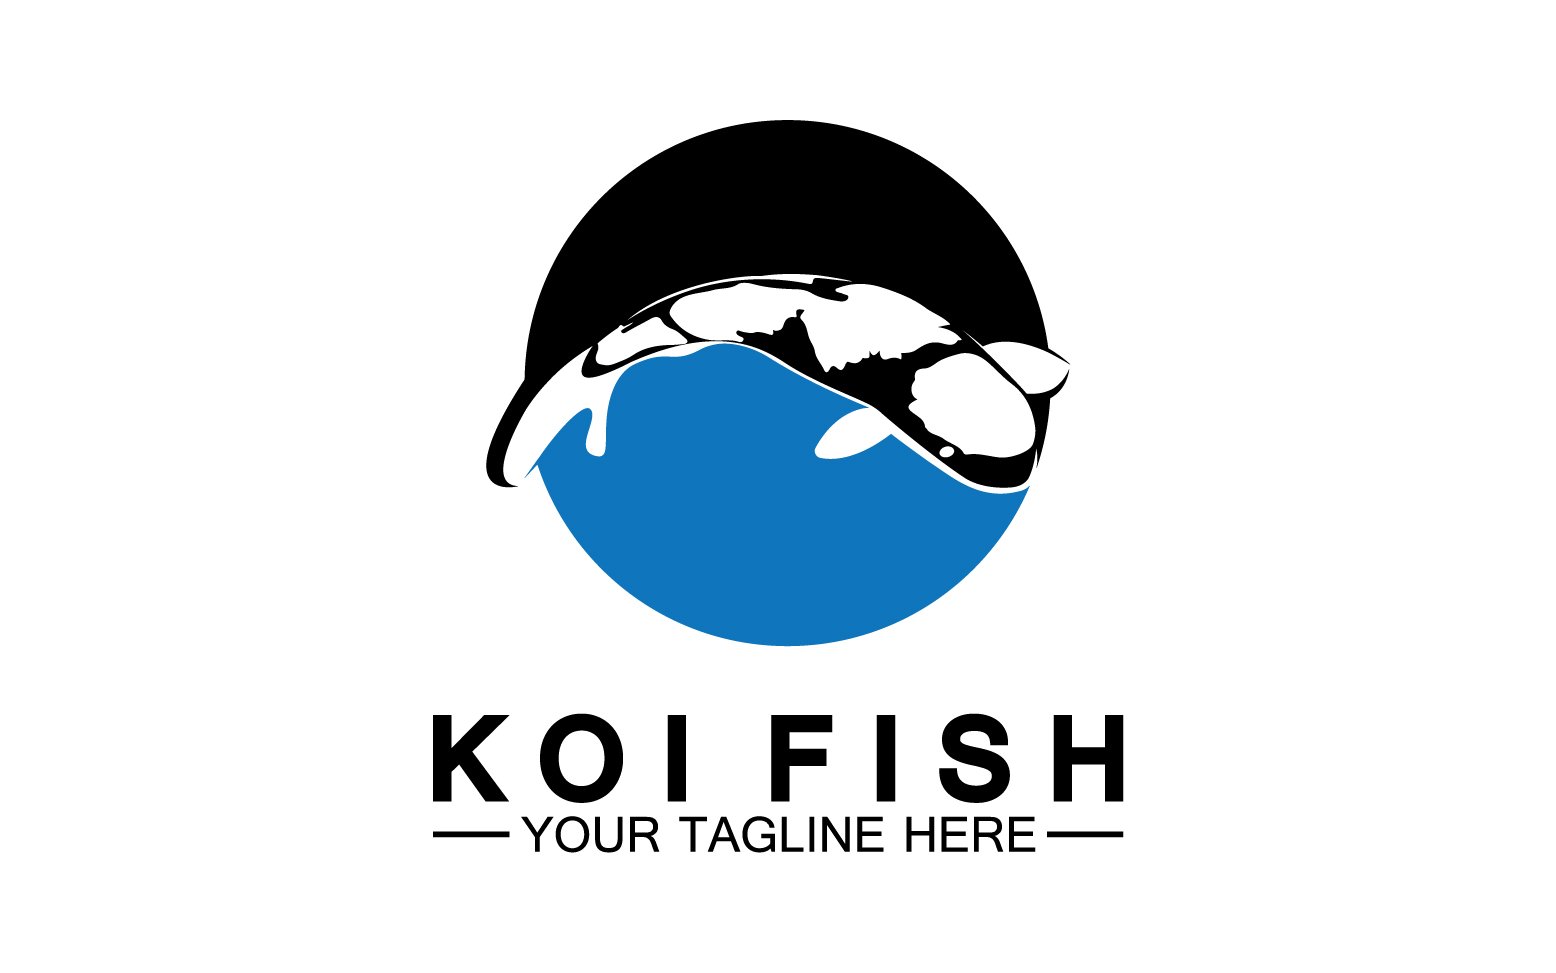 Fish koi black and red icon logo vector v25